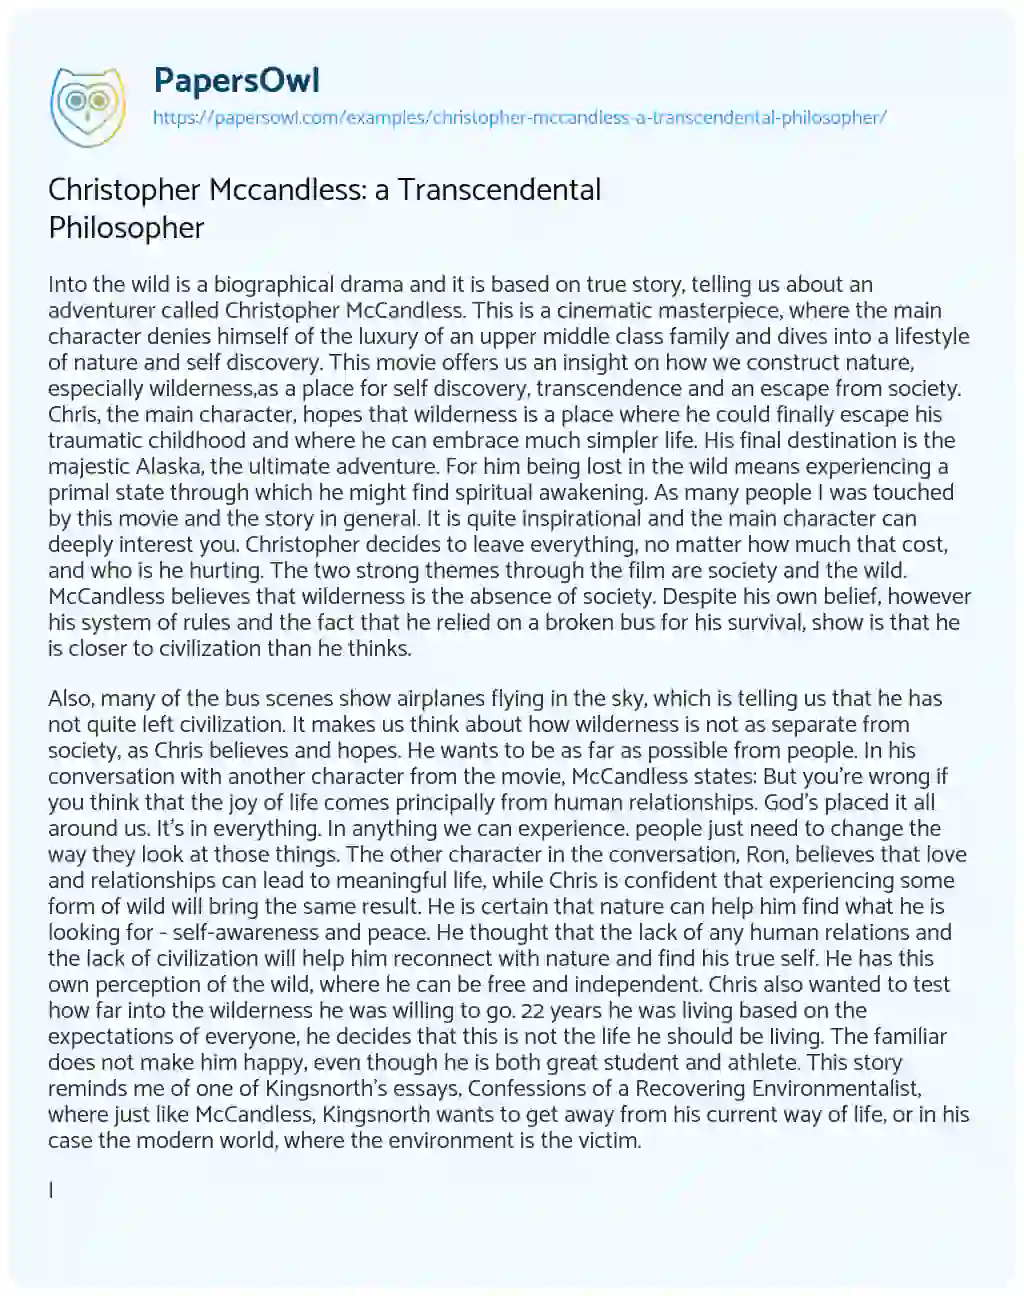 Essay on Christopher Mccandless: a Transcendental Philosopher